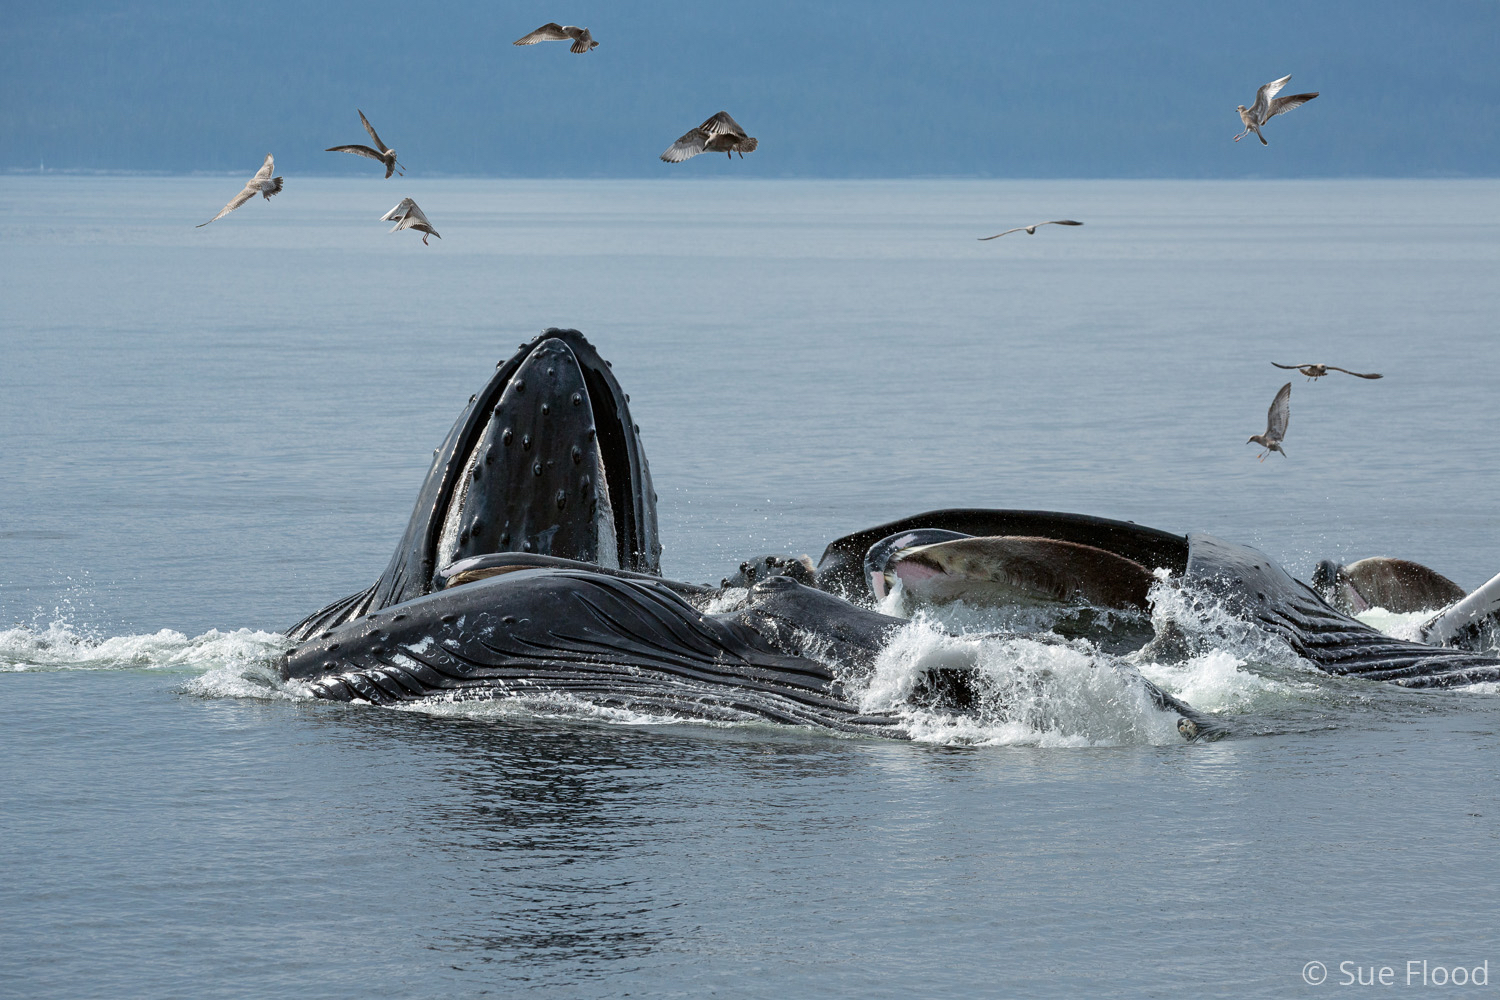 Lunge feeding humpback whales, British Columbia, Canada.